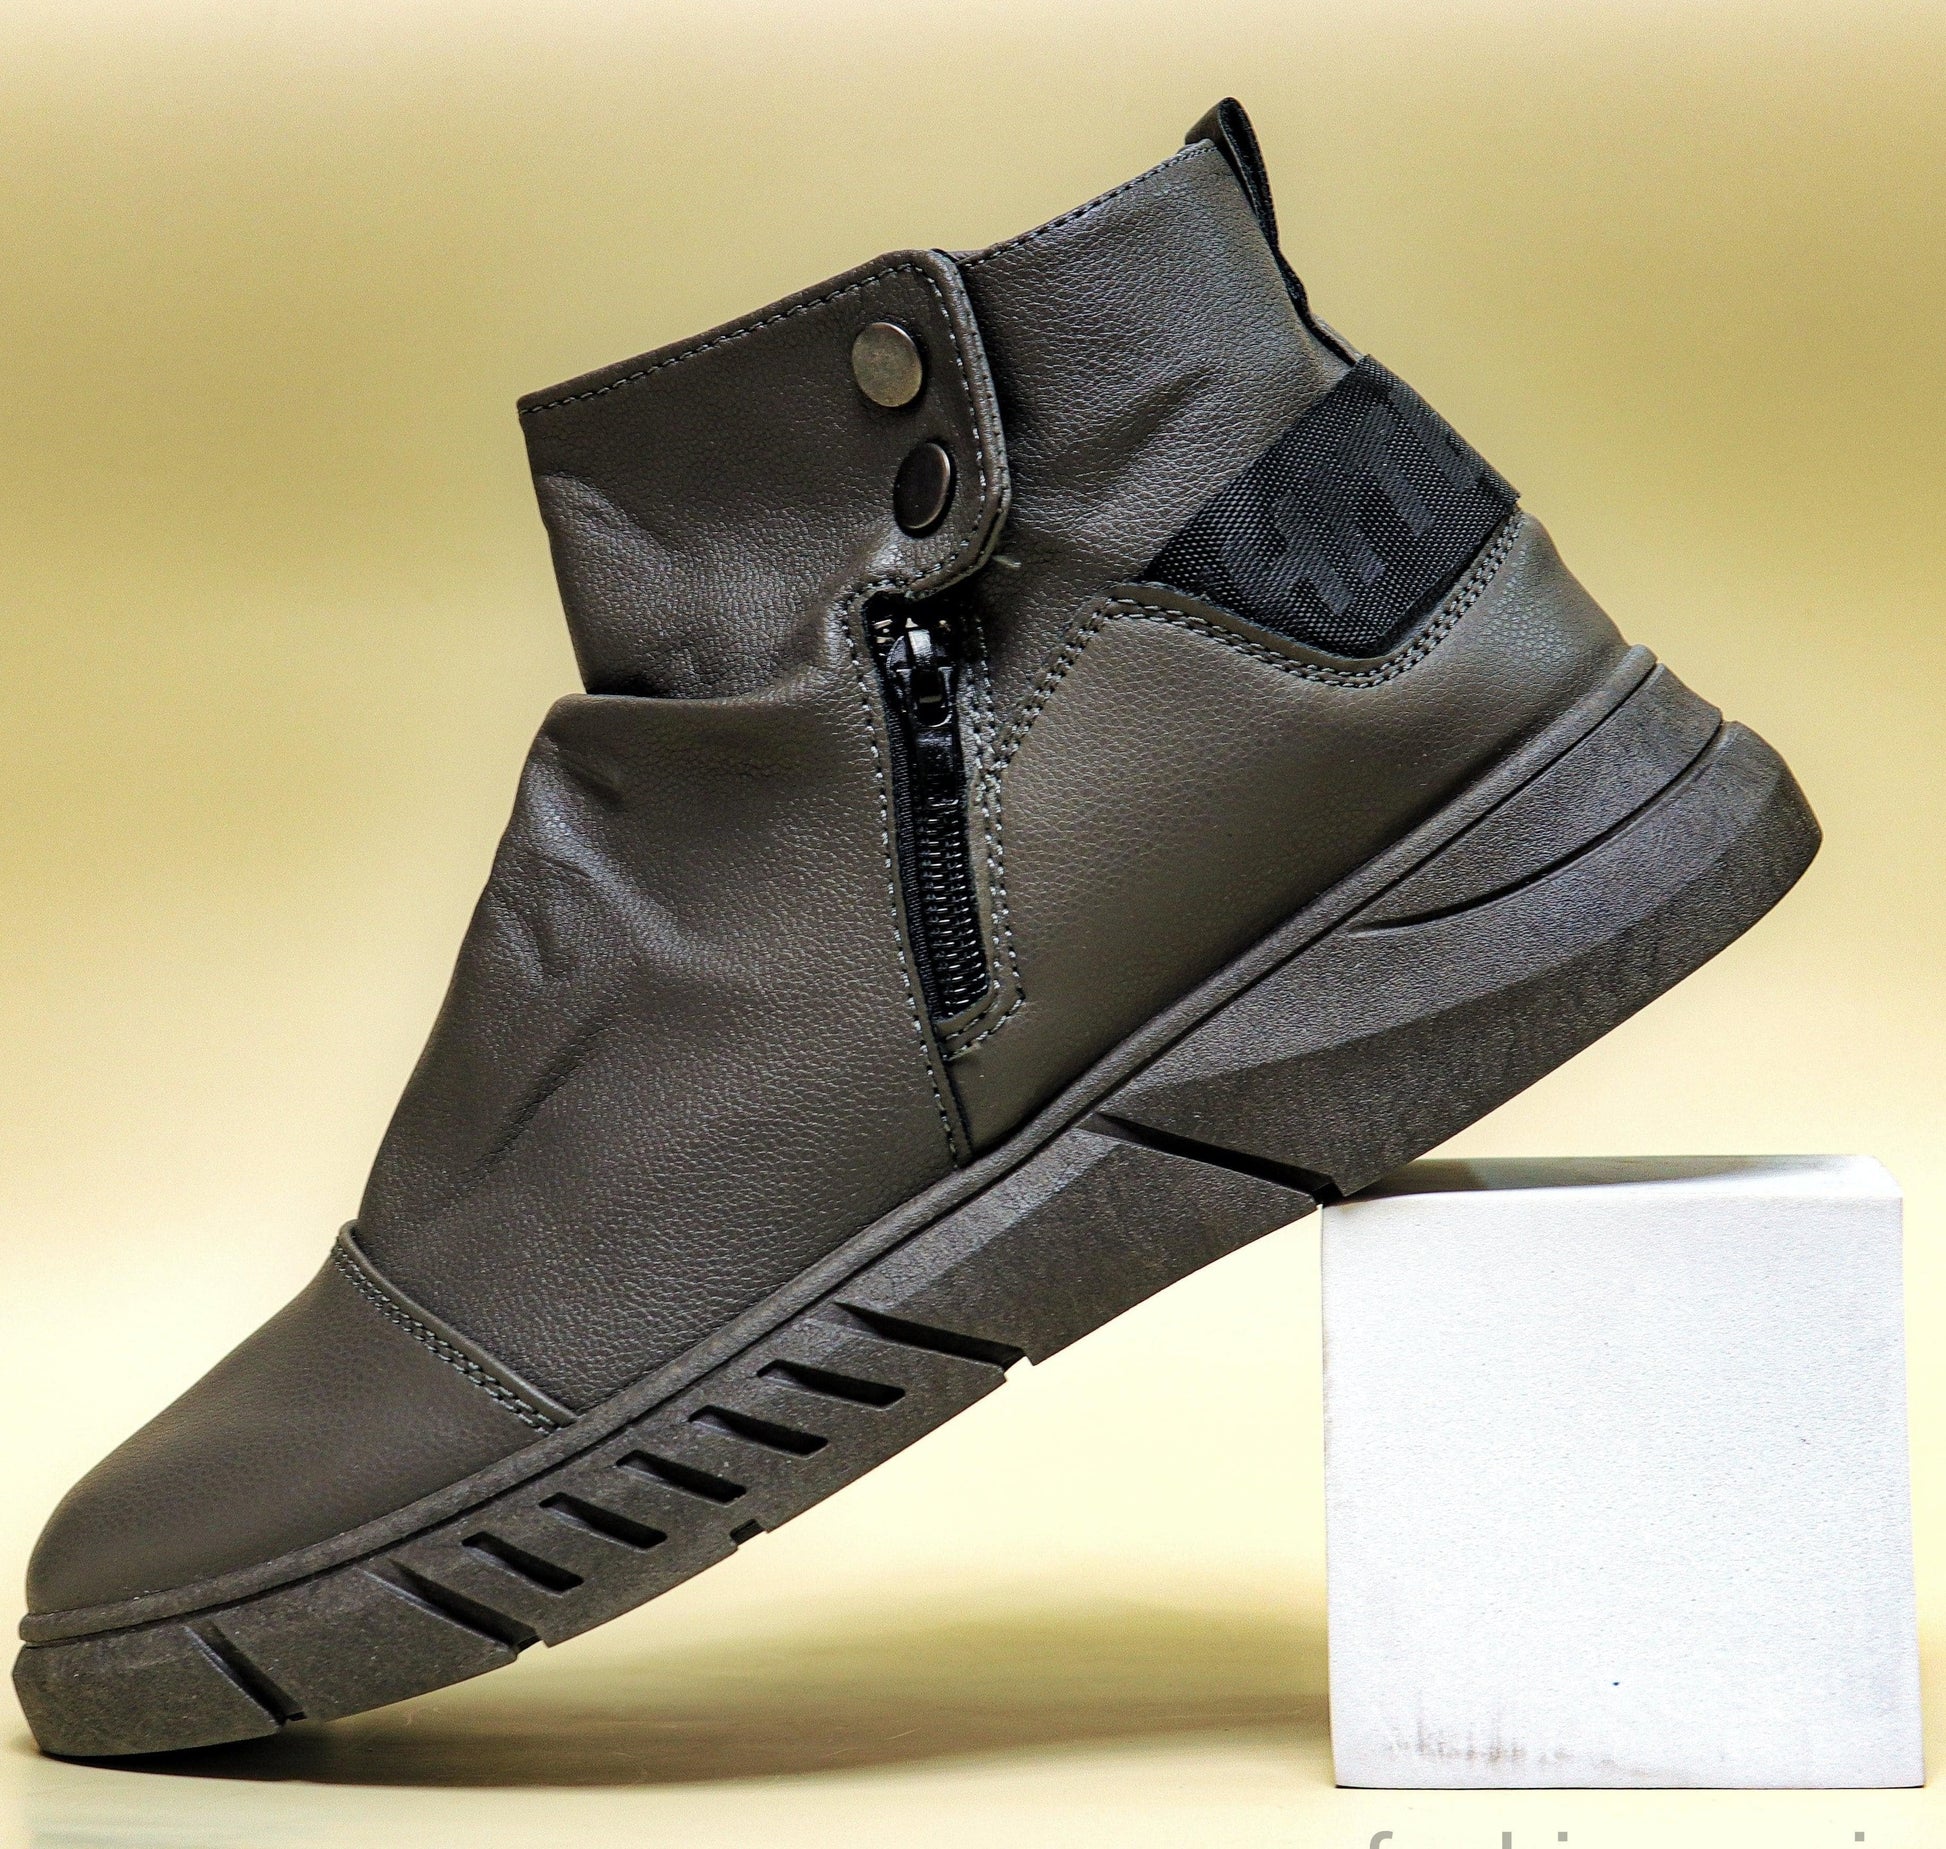 "Fashionray zipper" high casual boots shoes fashionray.in